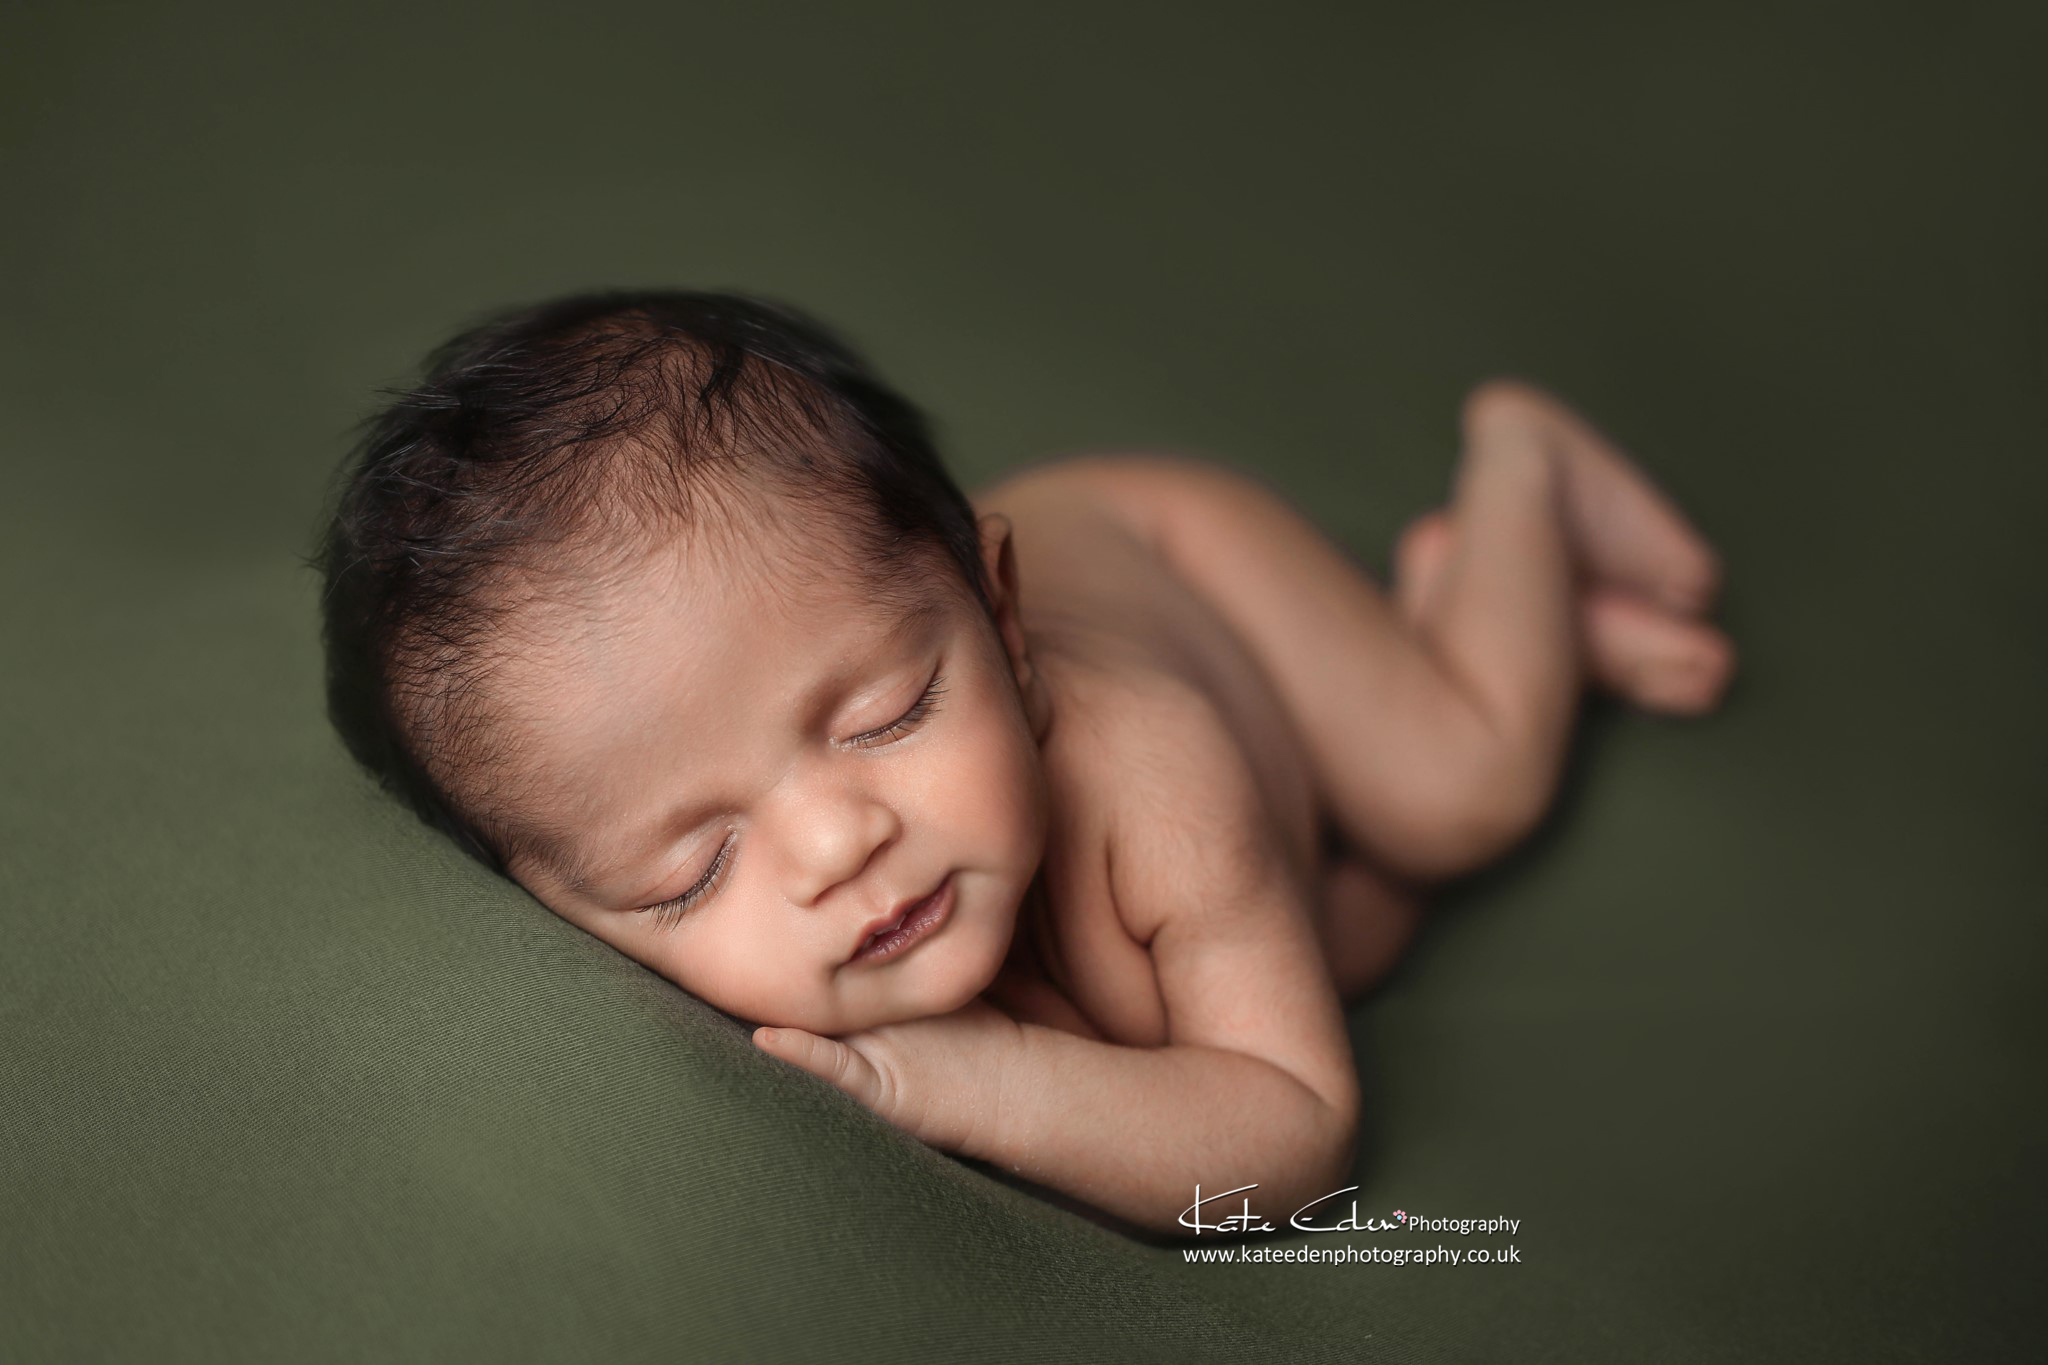 Newborn session in Milton Keynes - Kate Eden Photography 